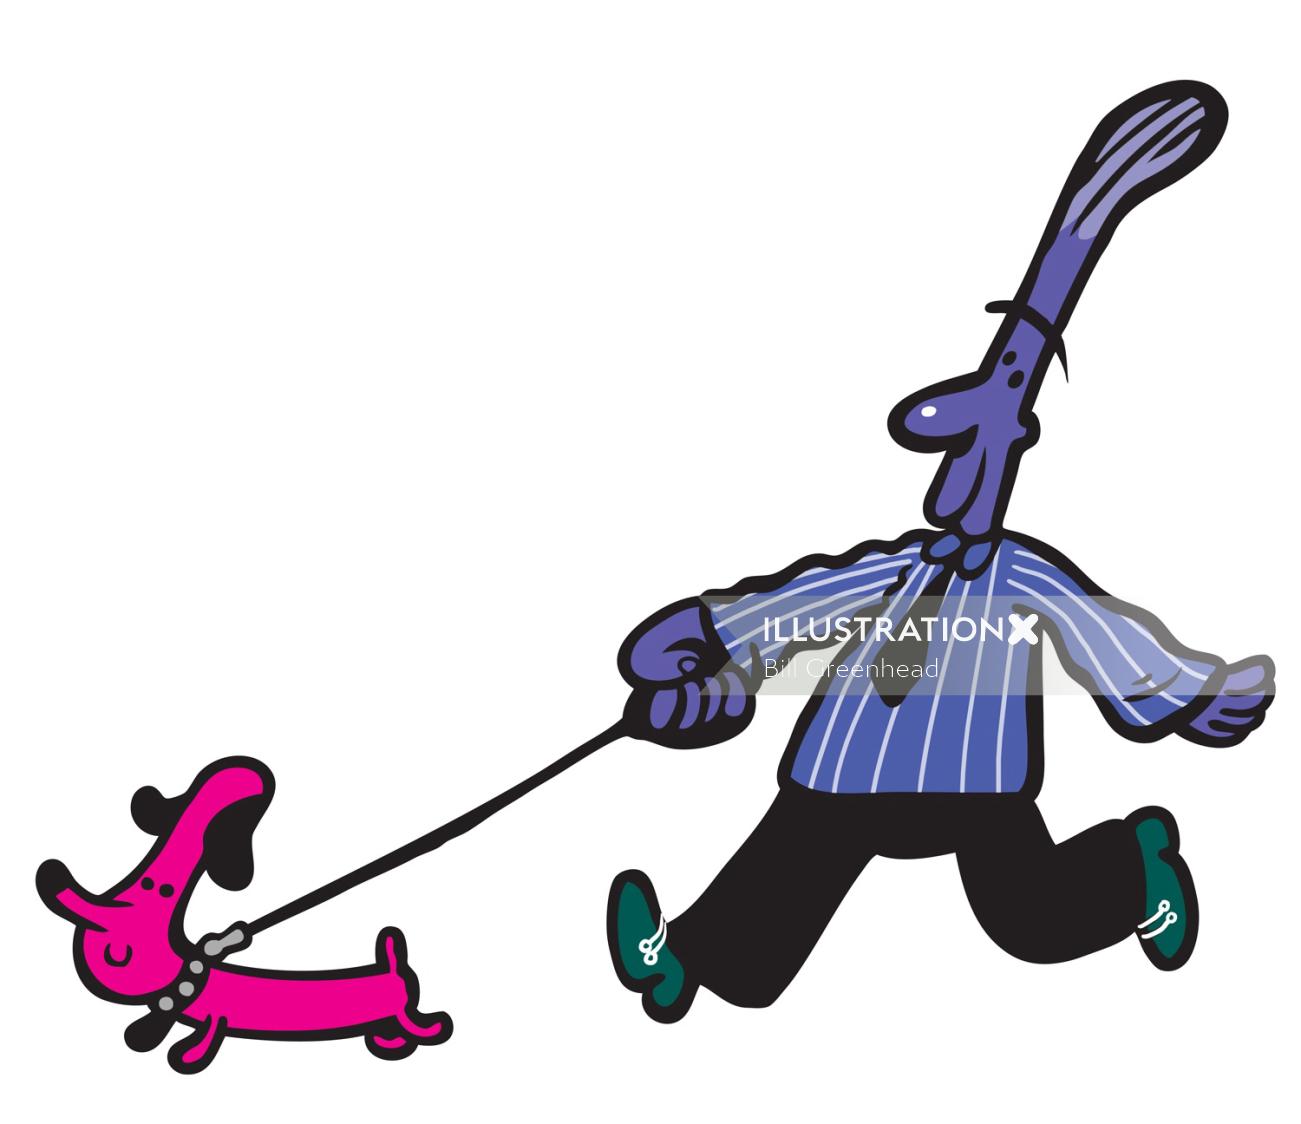 Cartoon character illustration of doggie walk